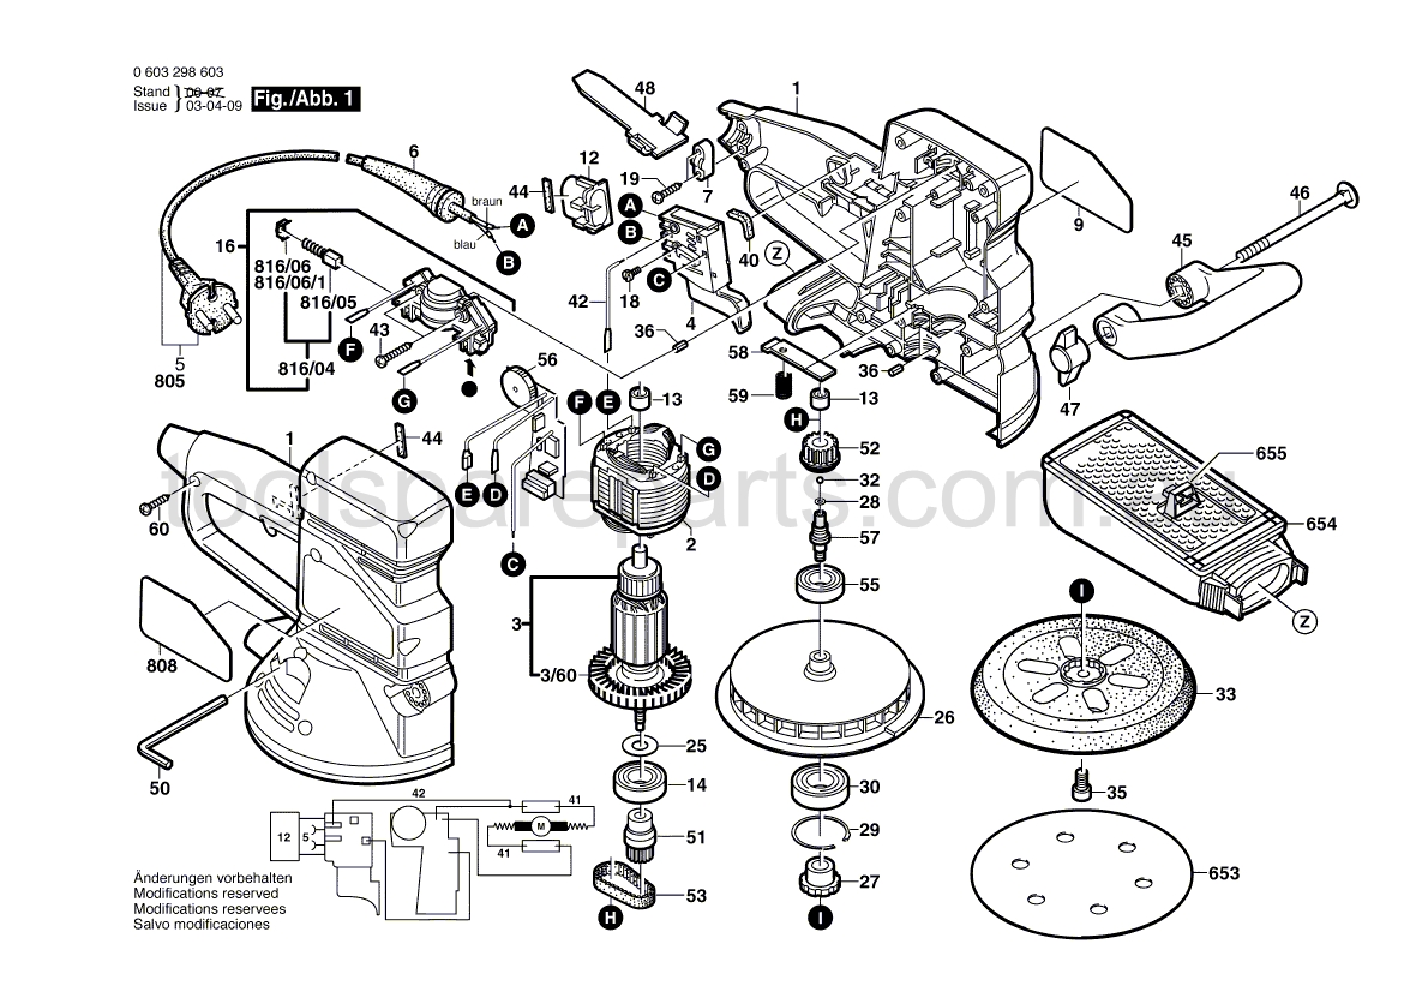 Bosch PEX 420 AE 0603298637  Diagram 1